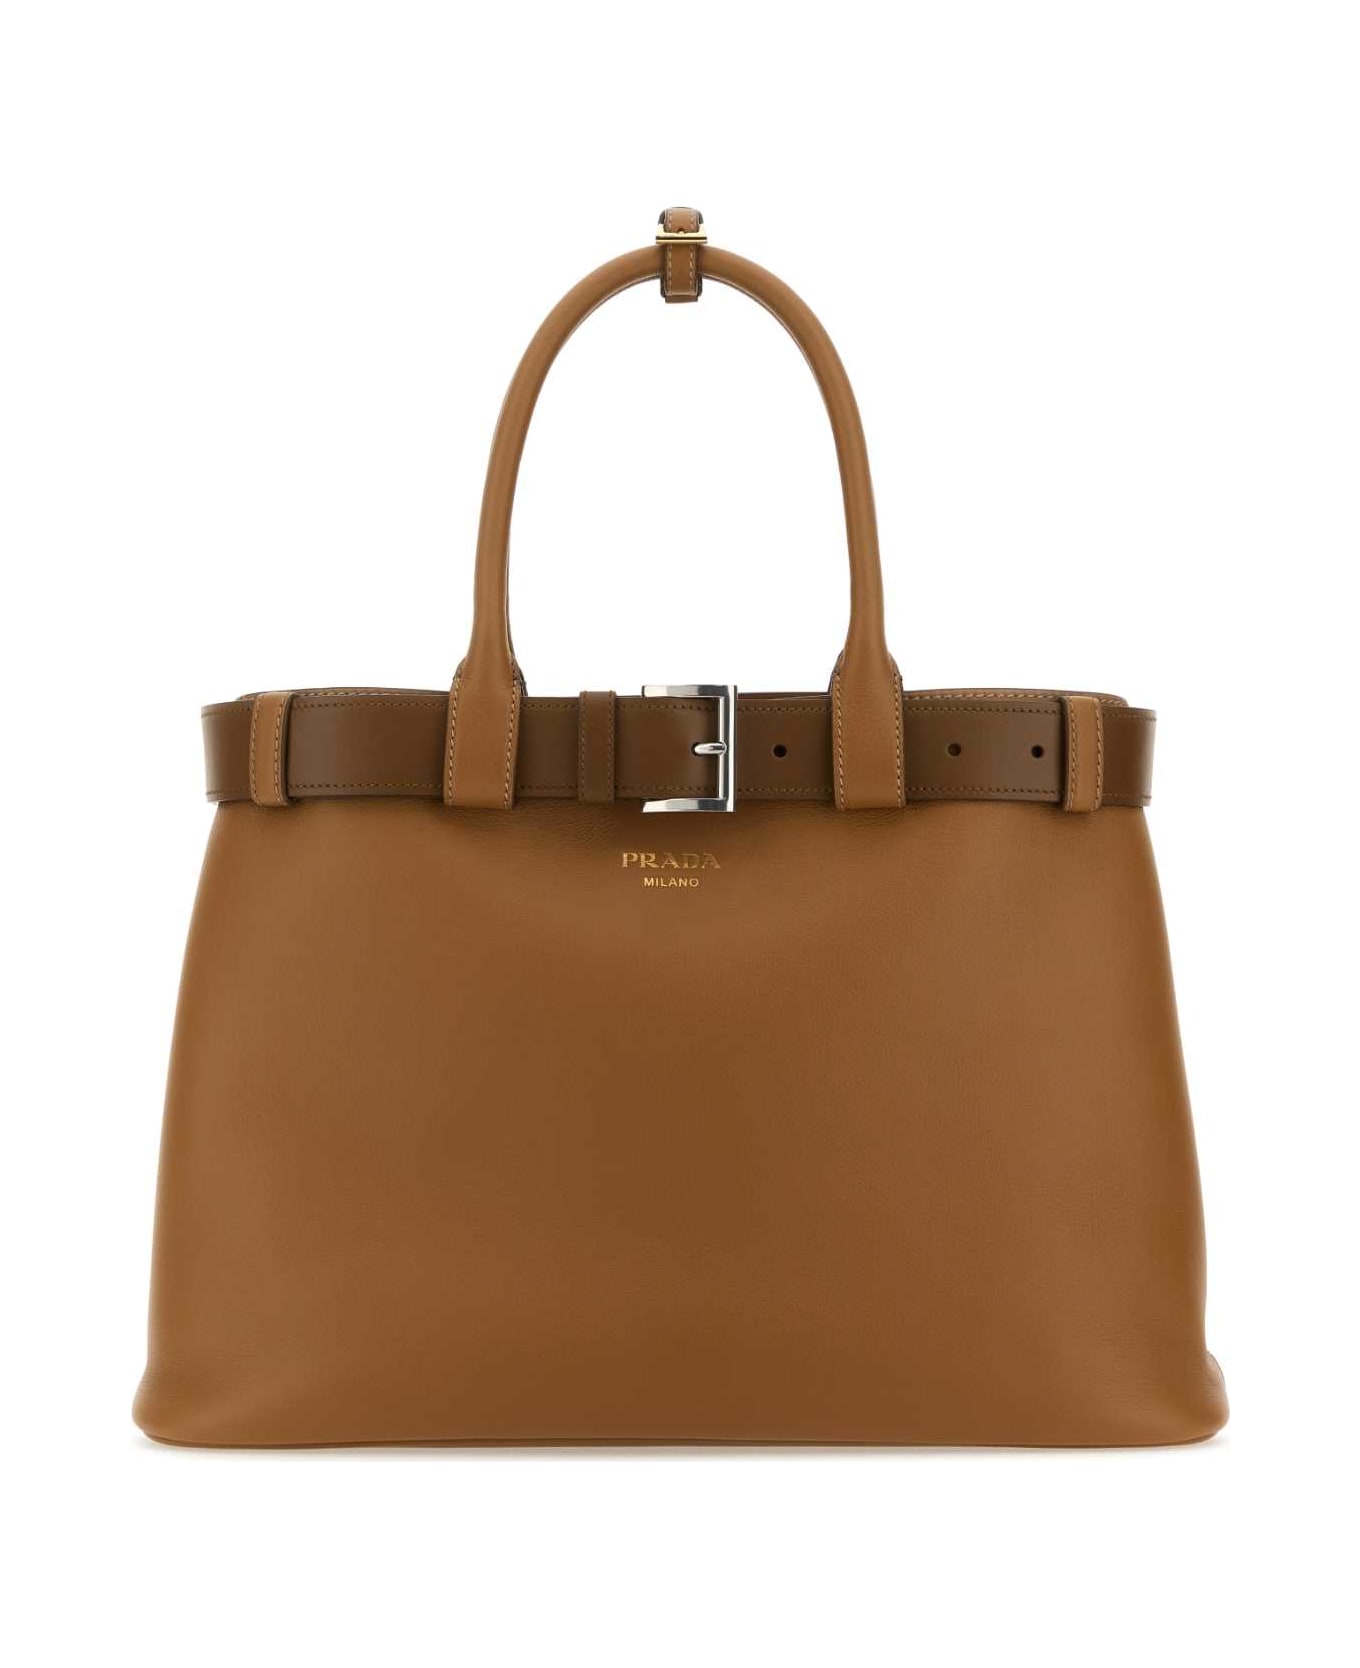 Prada Caramel Leather Prada Buckle Large Handbag - CARAMEL0